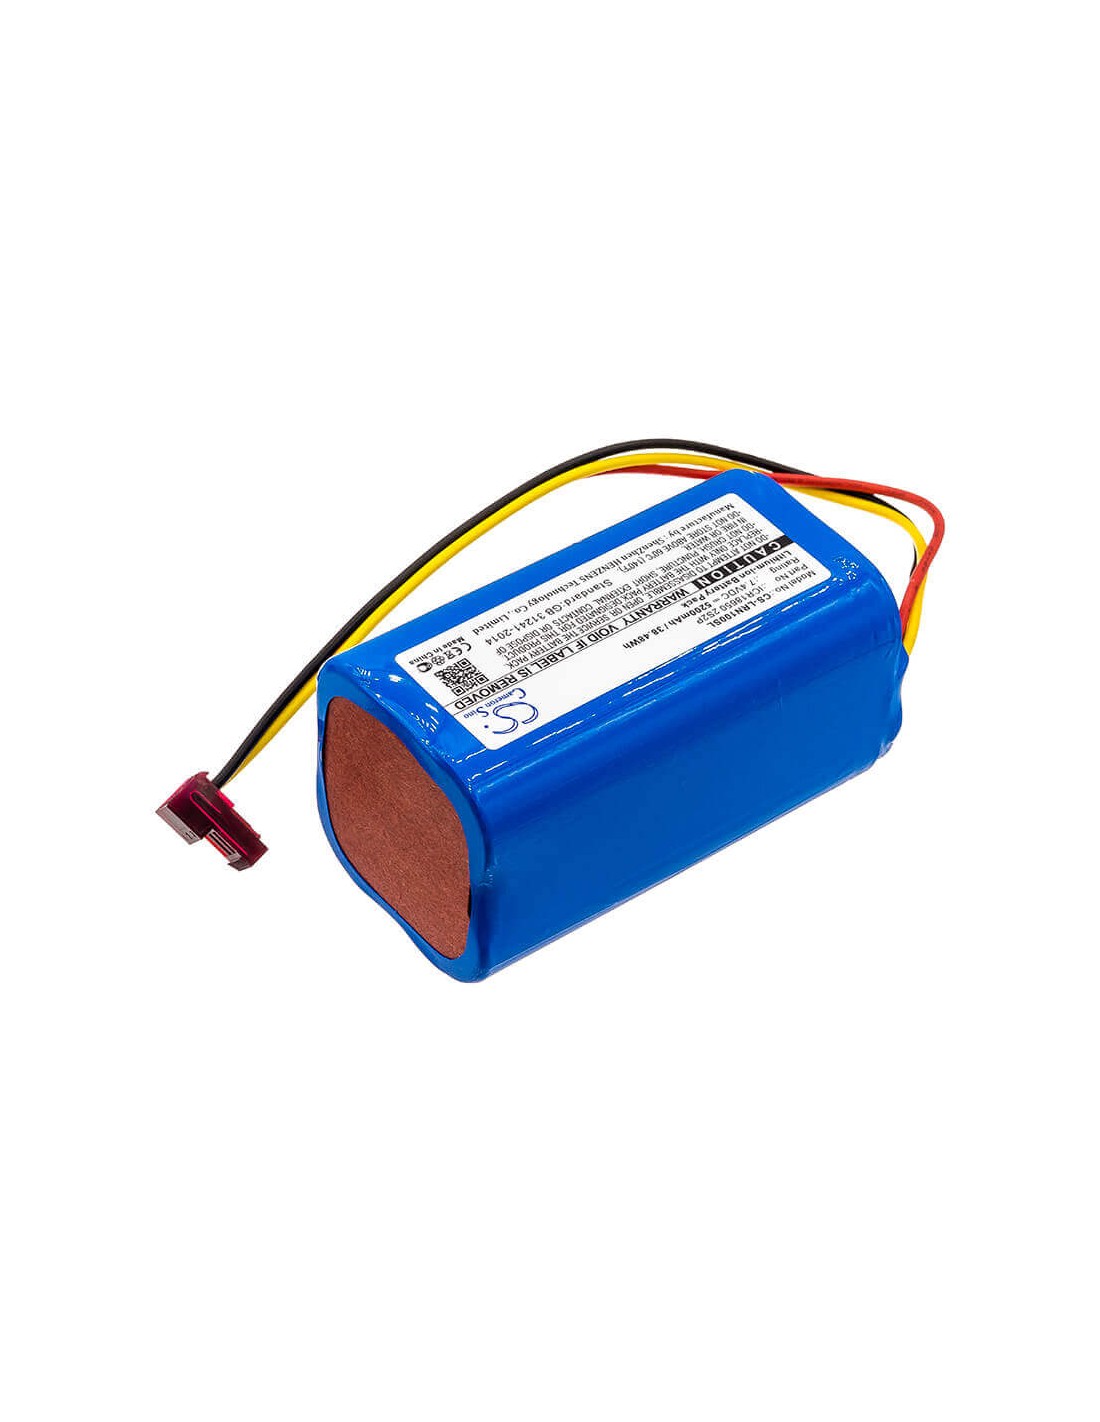 Battery for Lazer Runner, Compatible 6800 Mah 4 Cell Li-ion Battery Pack 7.4V, 5200mAh - 38.48Wh